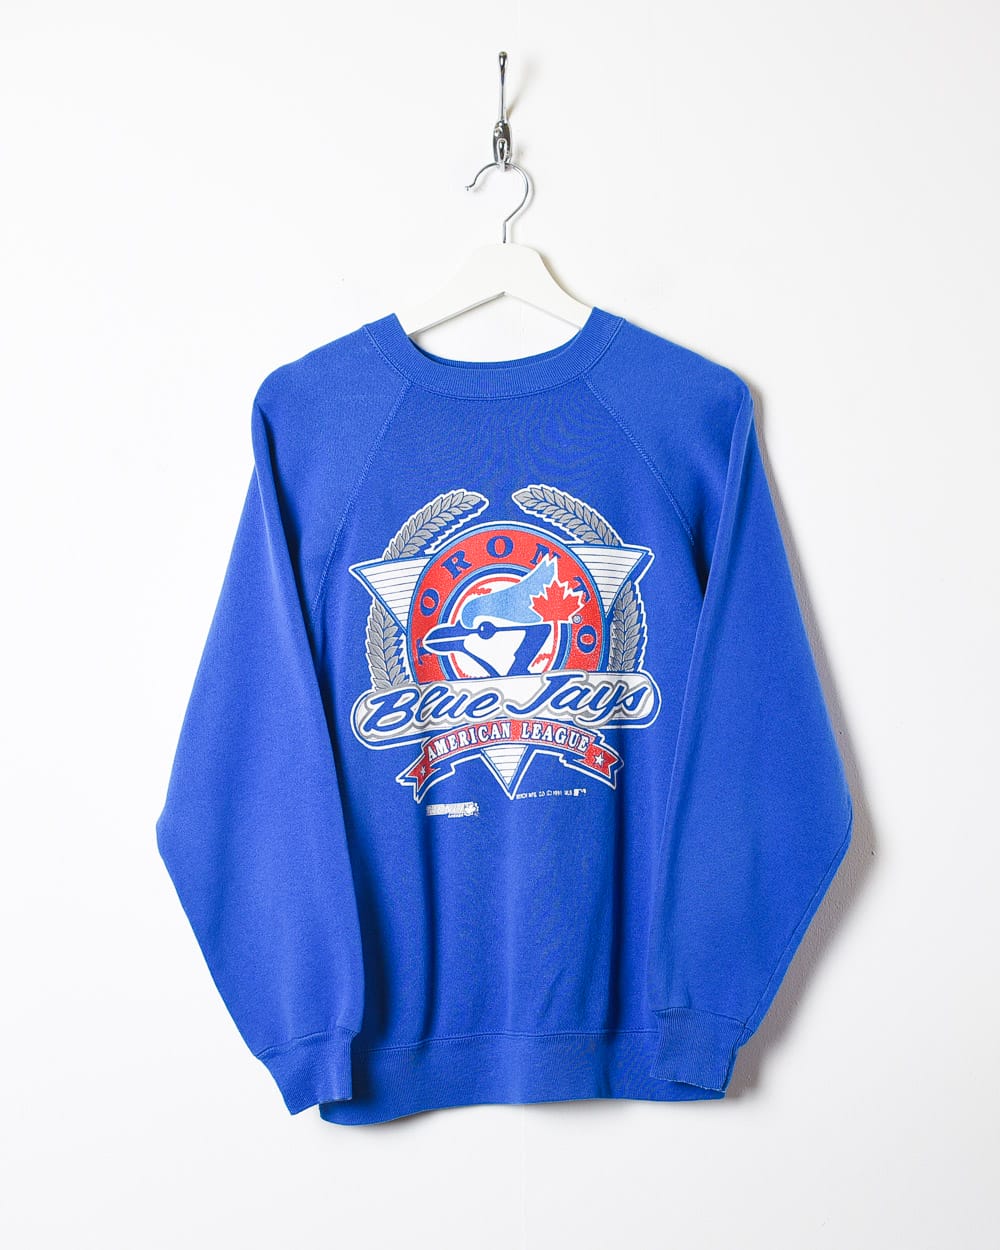 Blue MLB Toronto Blue Jays Graphic Sweatshirt - Small